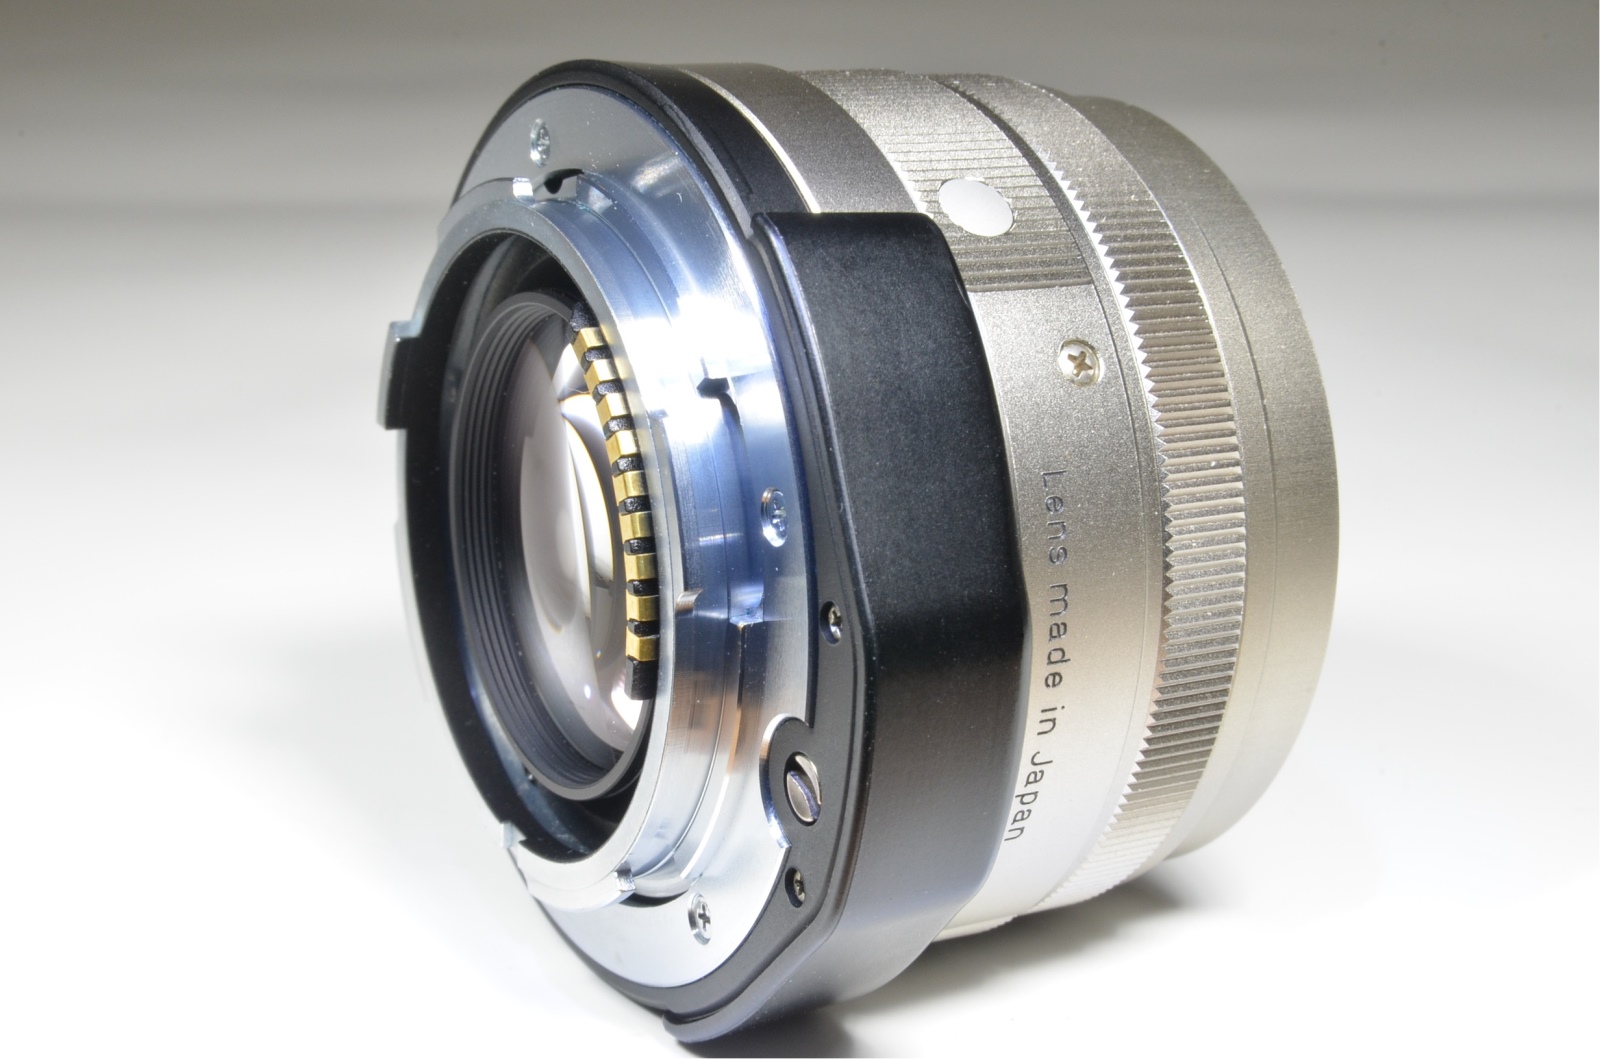 contax g2 camera / planar 45mm f2 / biogon 28mm f2.8 / sonnar 90mm f2.8